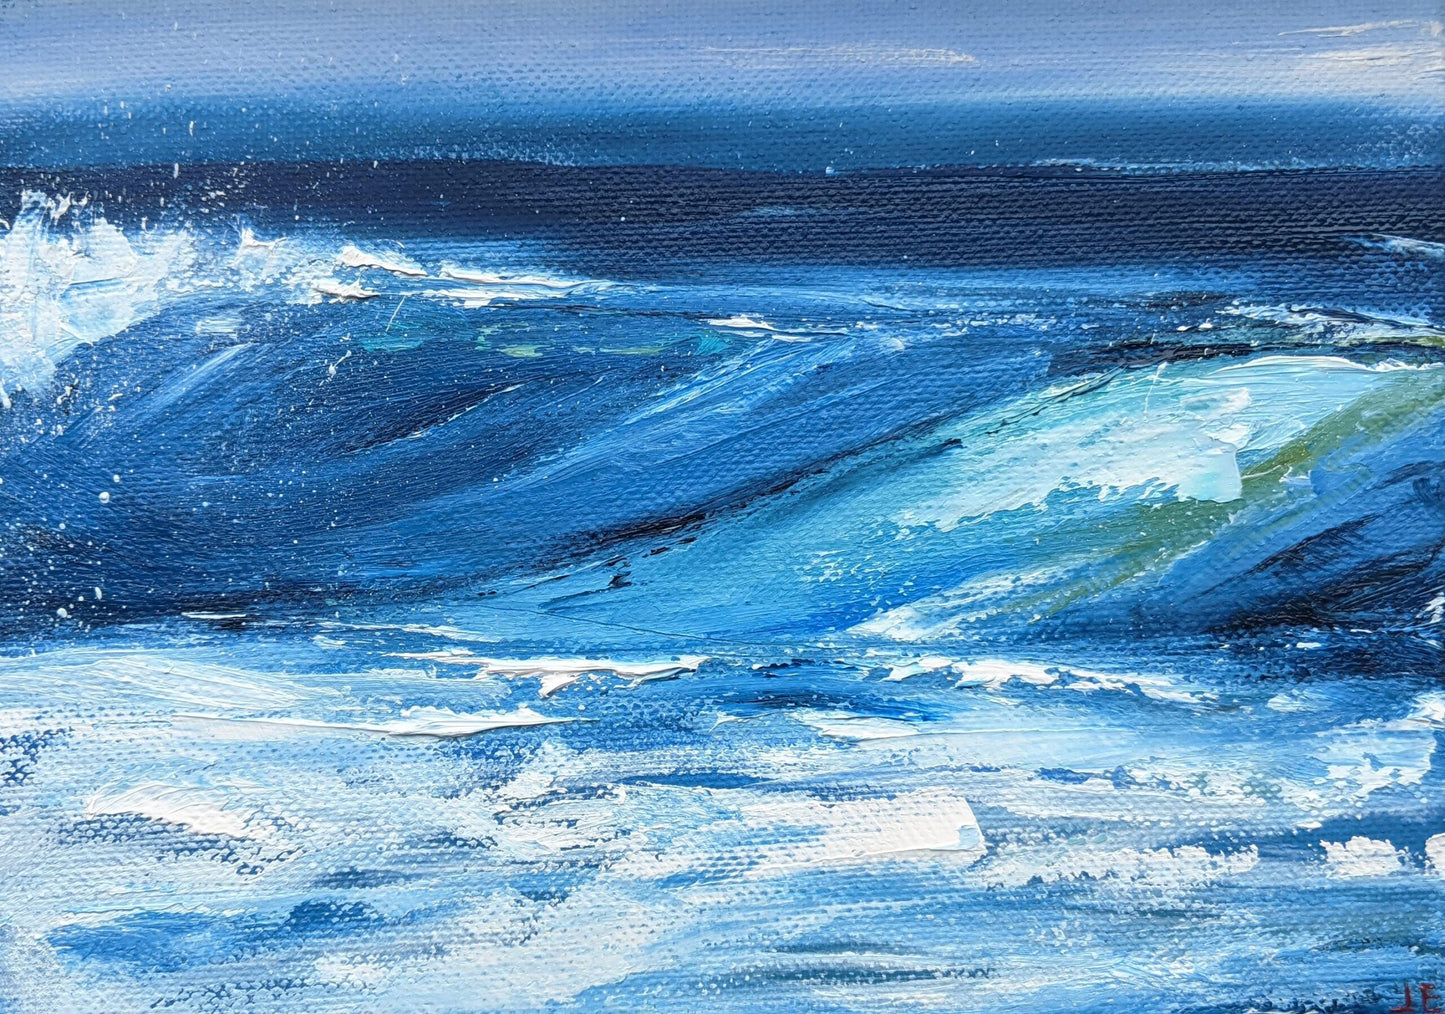 Miniature Wave Seascape #10 oil painting on canvas board, by Jo Earl